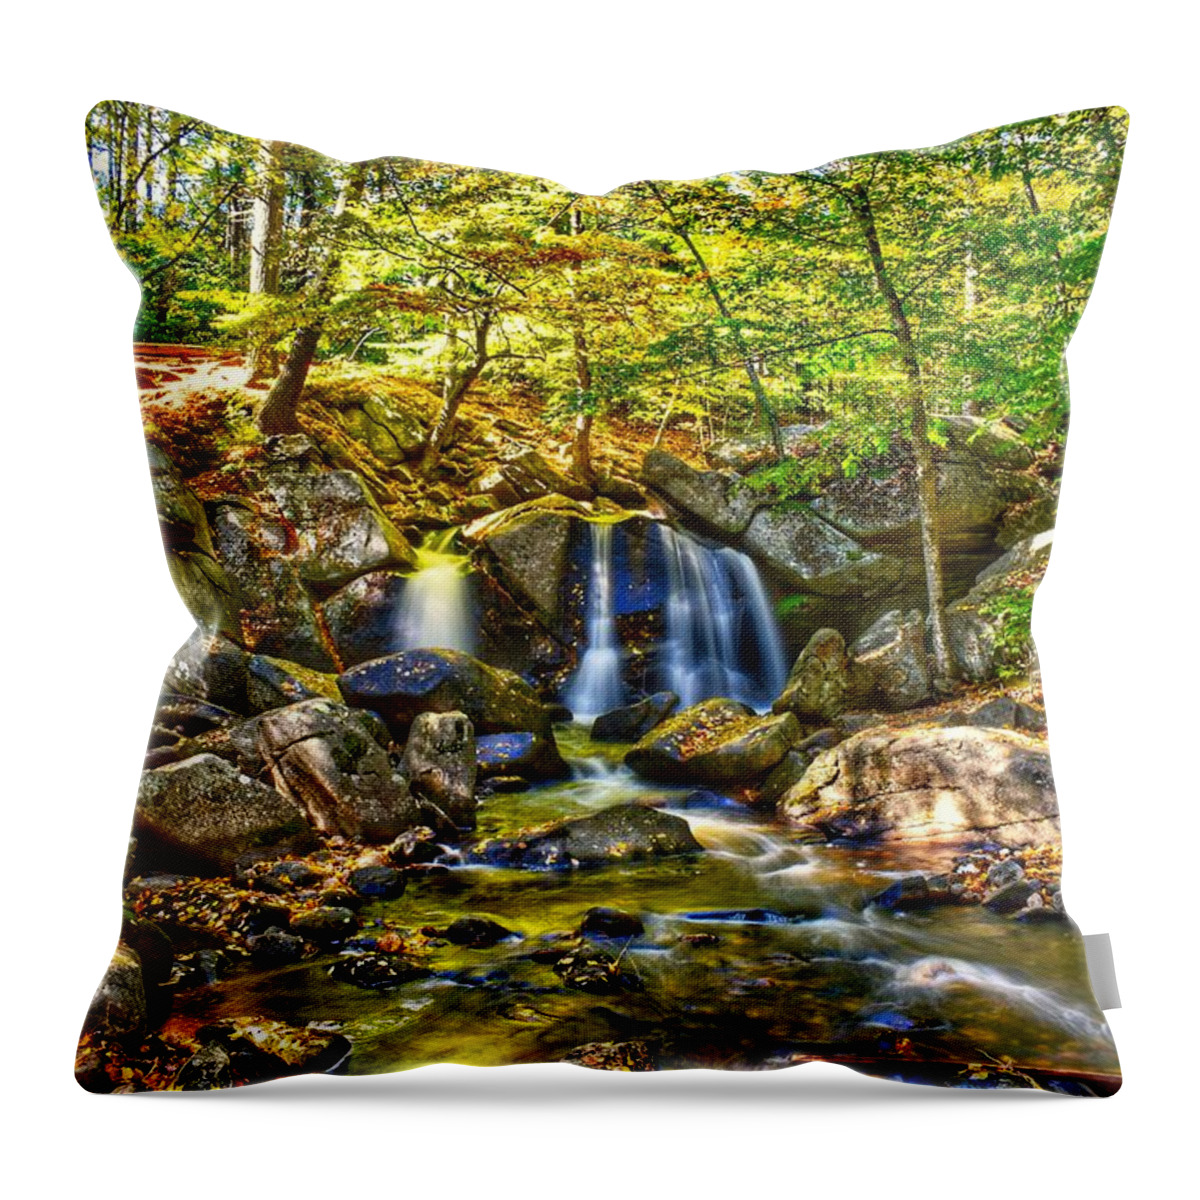 Landscape Throw Pillow featuring the photograph Trap Falls by Monika Salvan